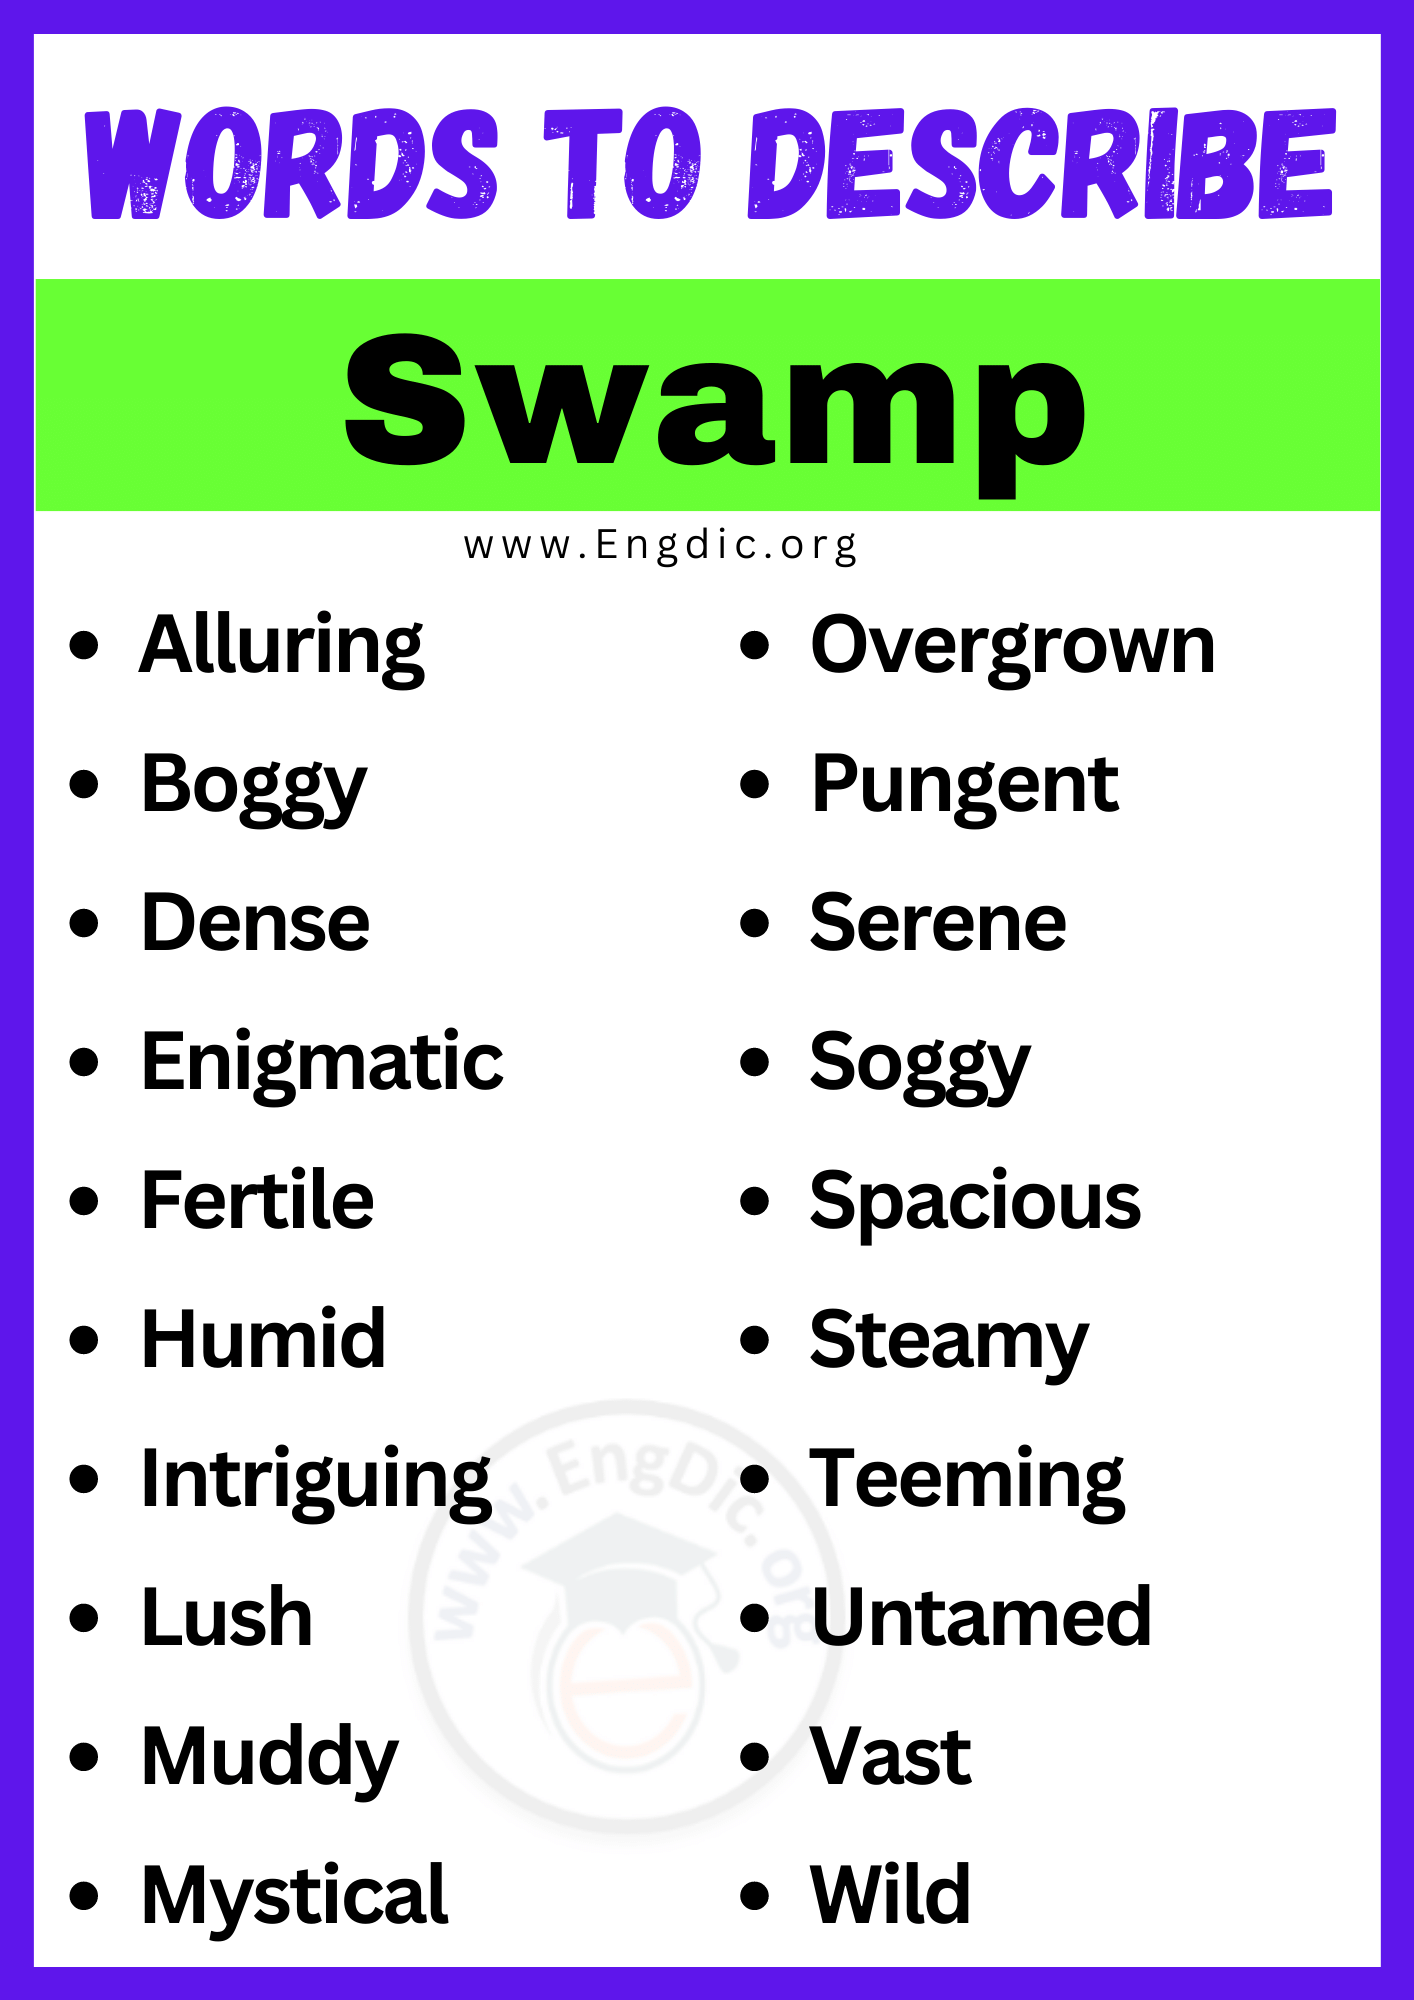 Words to Describe Swamp